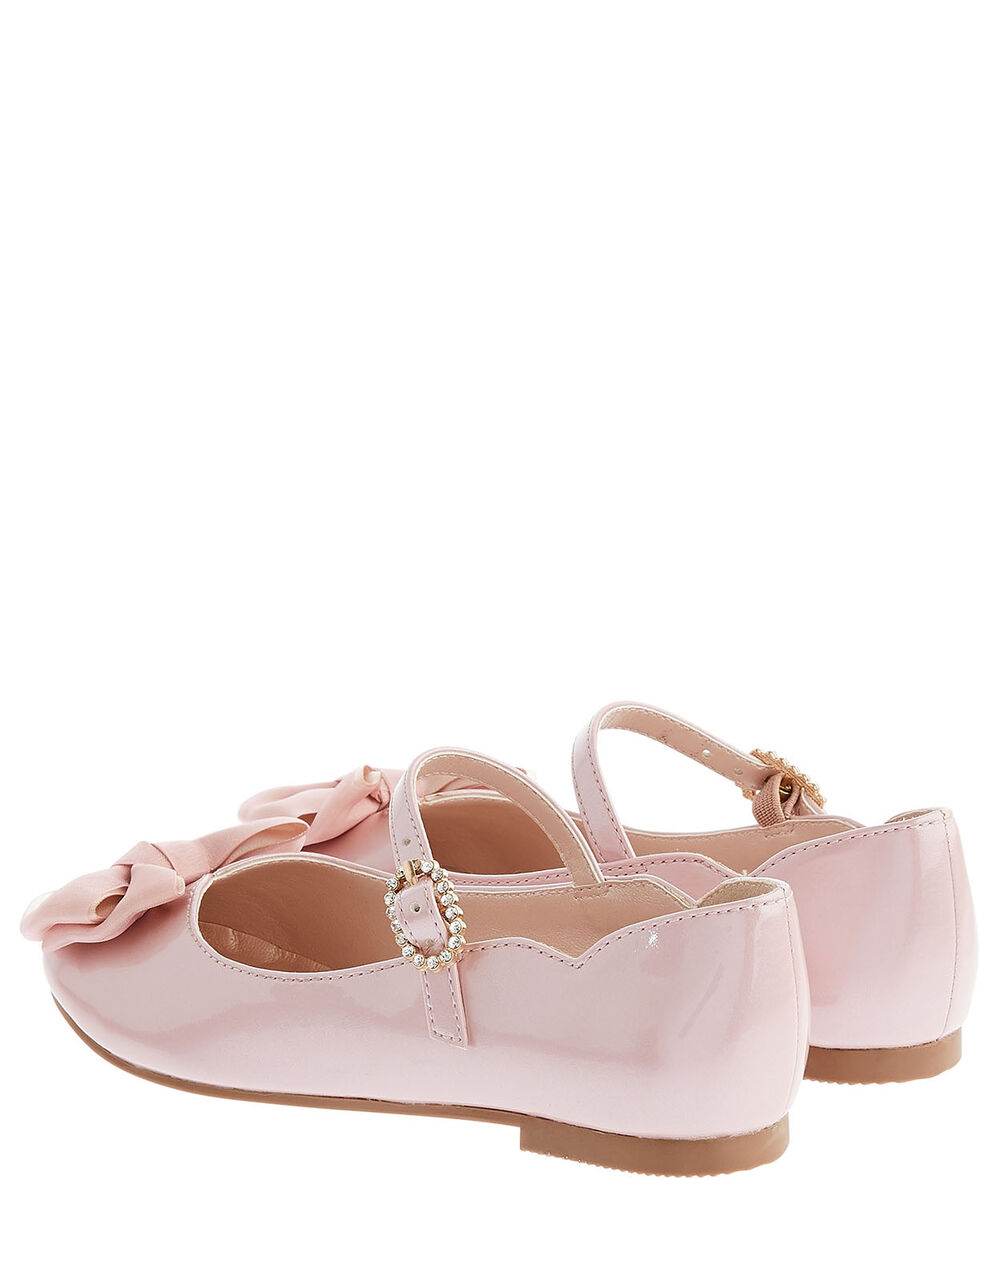 Kali Bow Patent Ballerina Flats Pink | Girls' Flat Shoes | Monsoon Global.